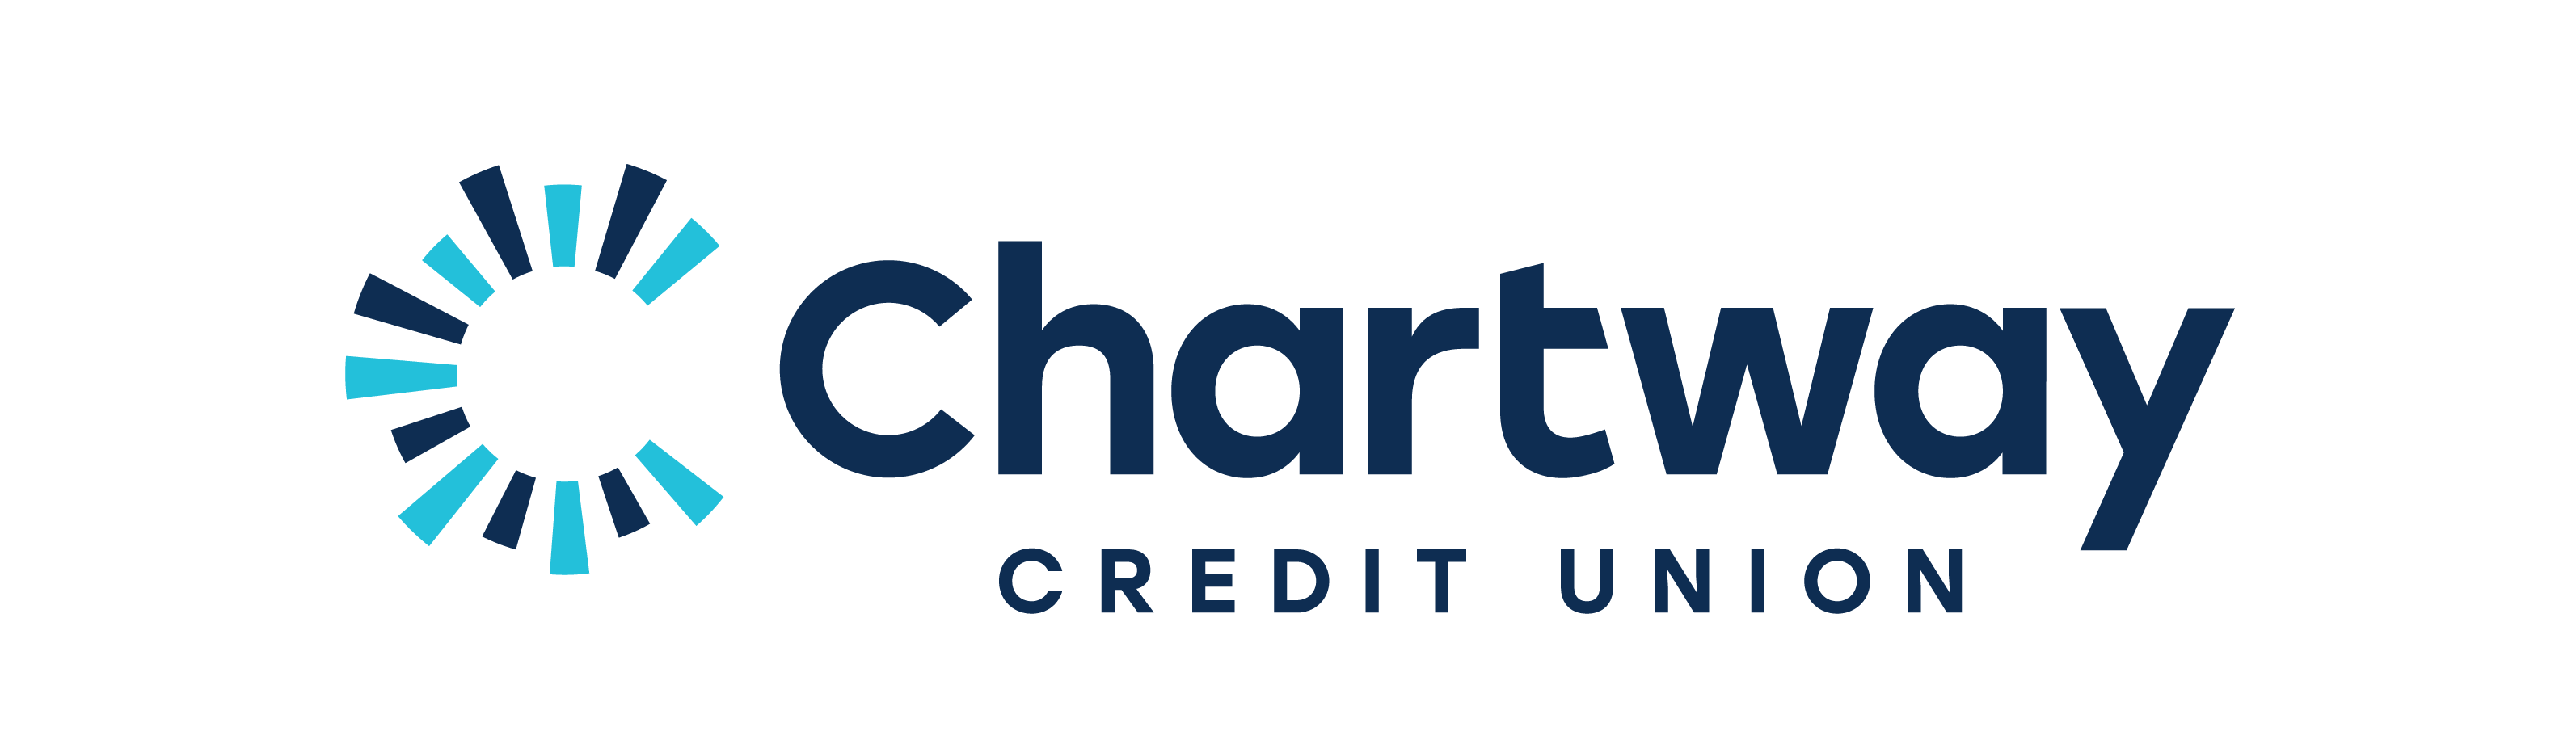 Chartway Credit Union logo